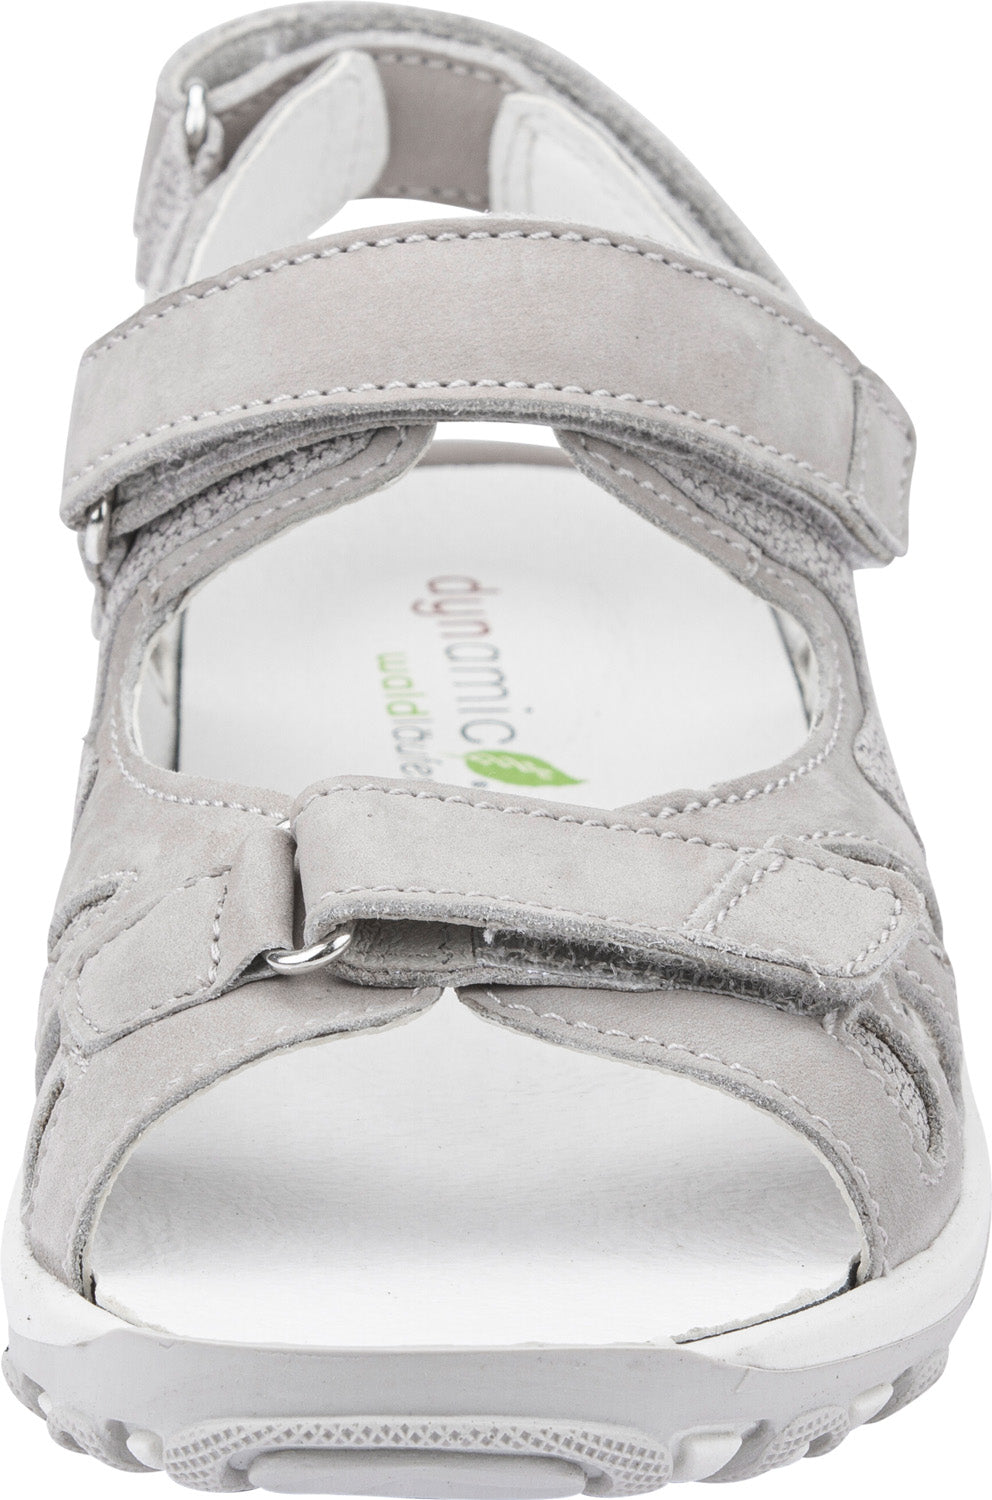 Waldlaufer 448001 229 070 Hanni Ladies Stone Leather Touch Fastening Sandals